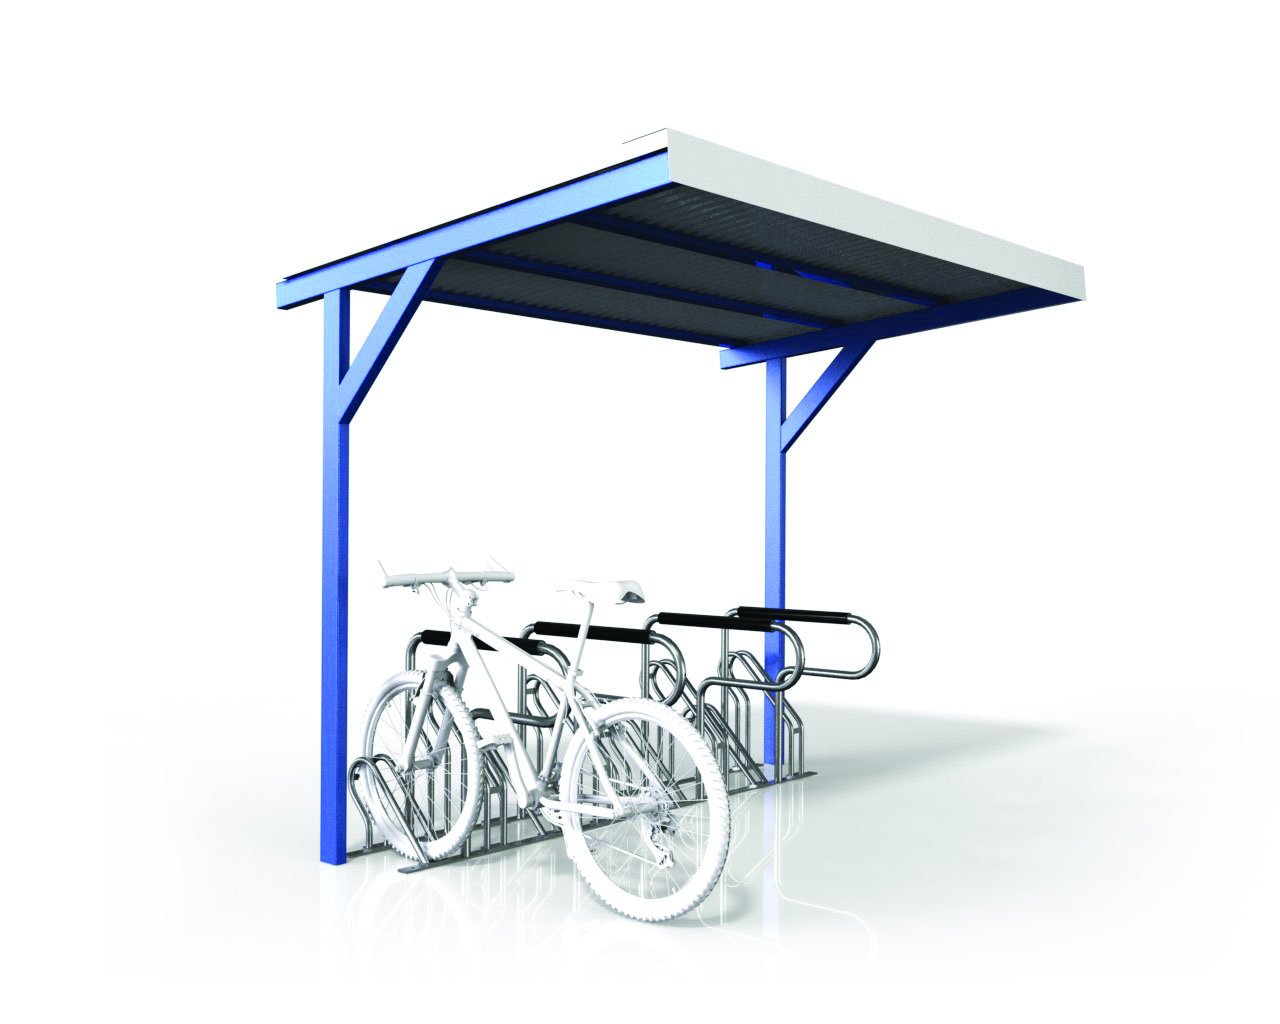 Single Sided Access 8 Bike Shelter - Type 3